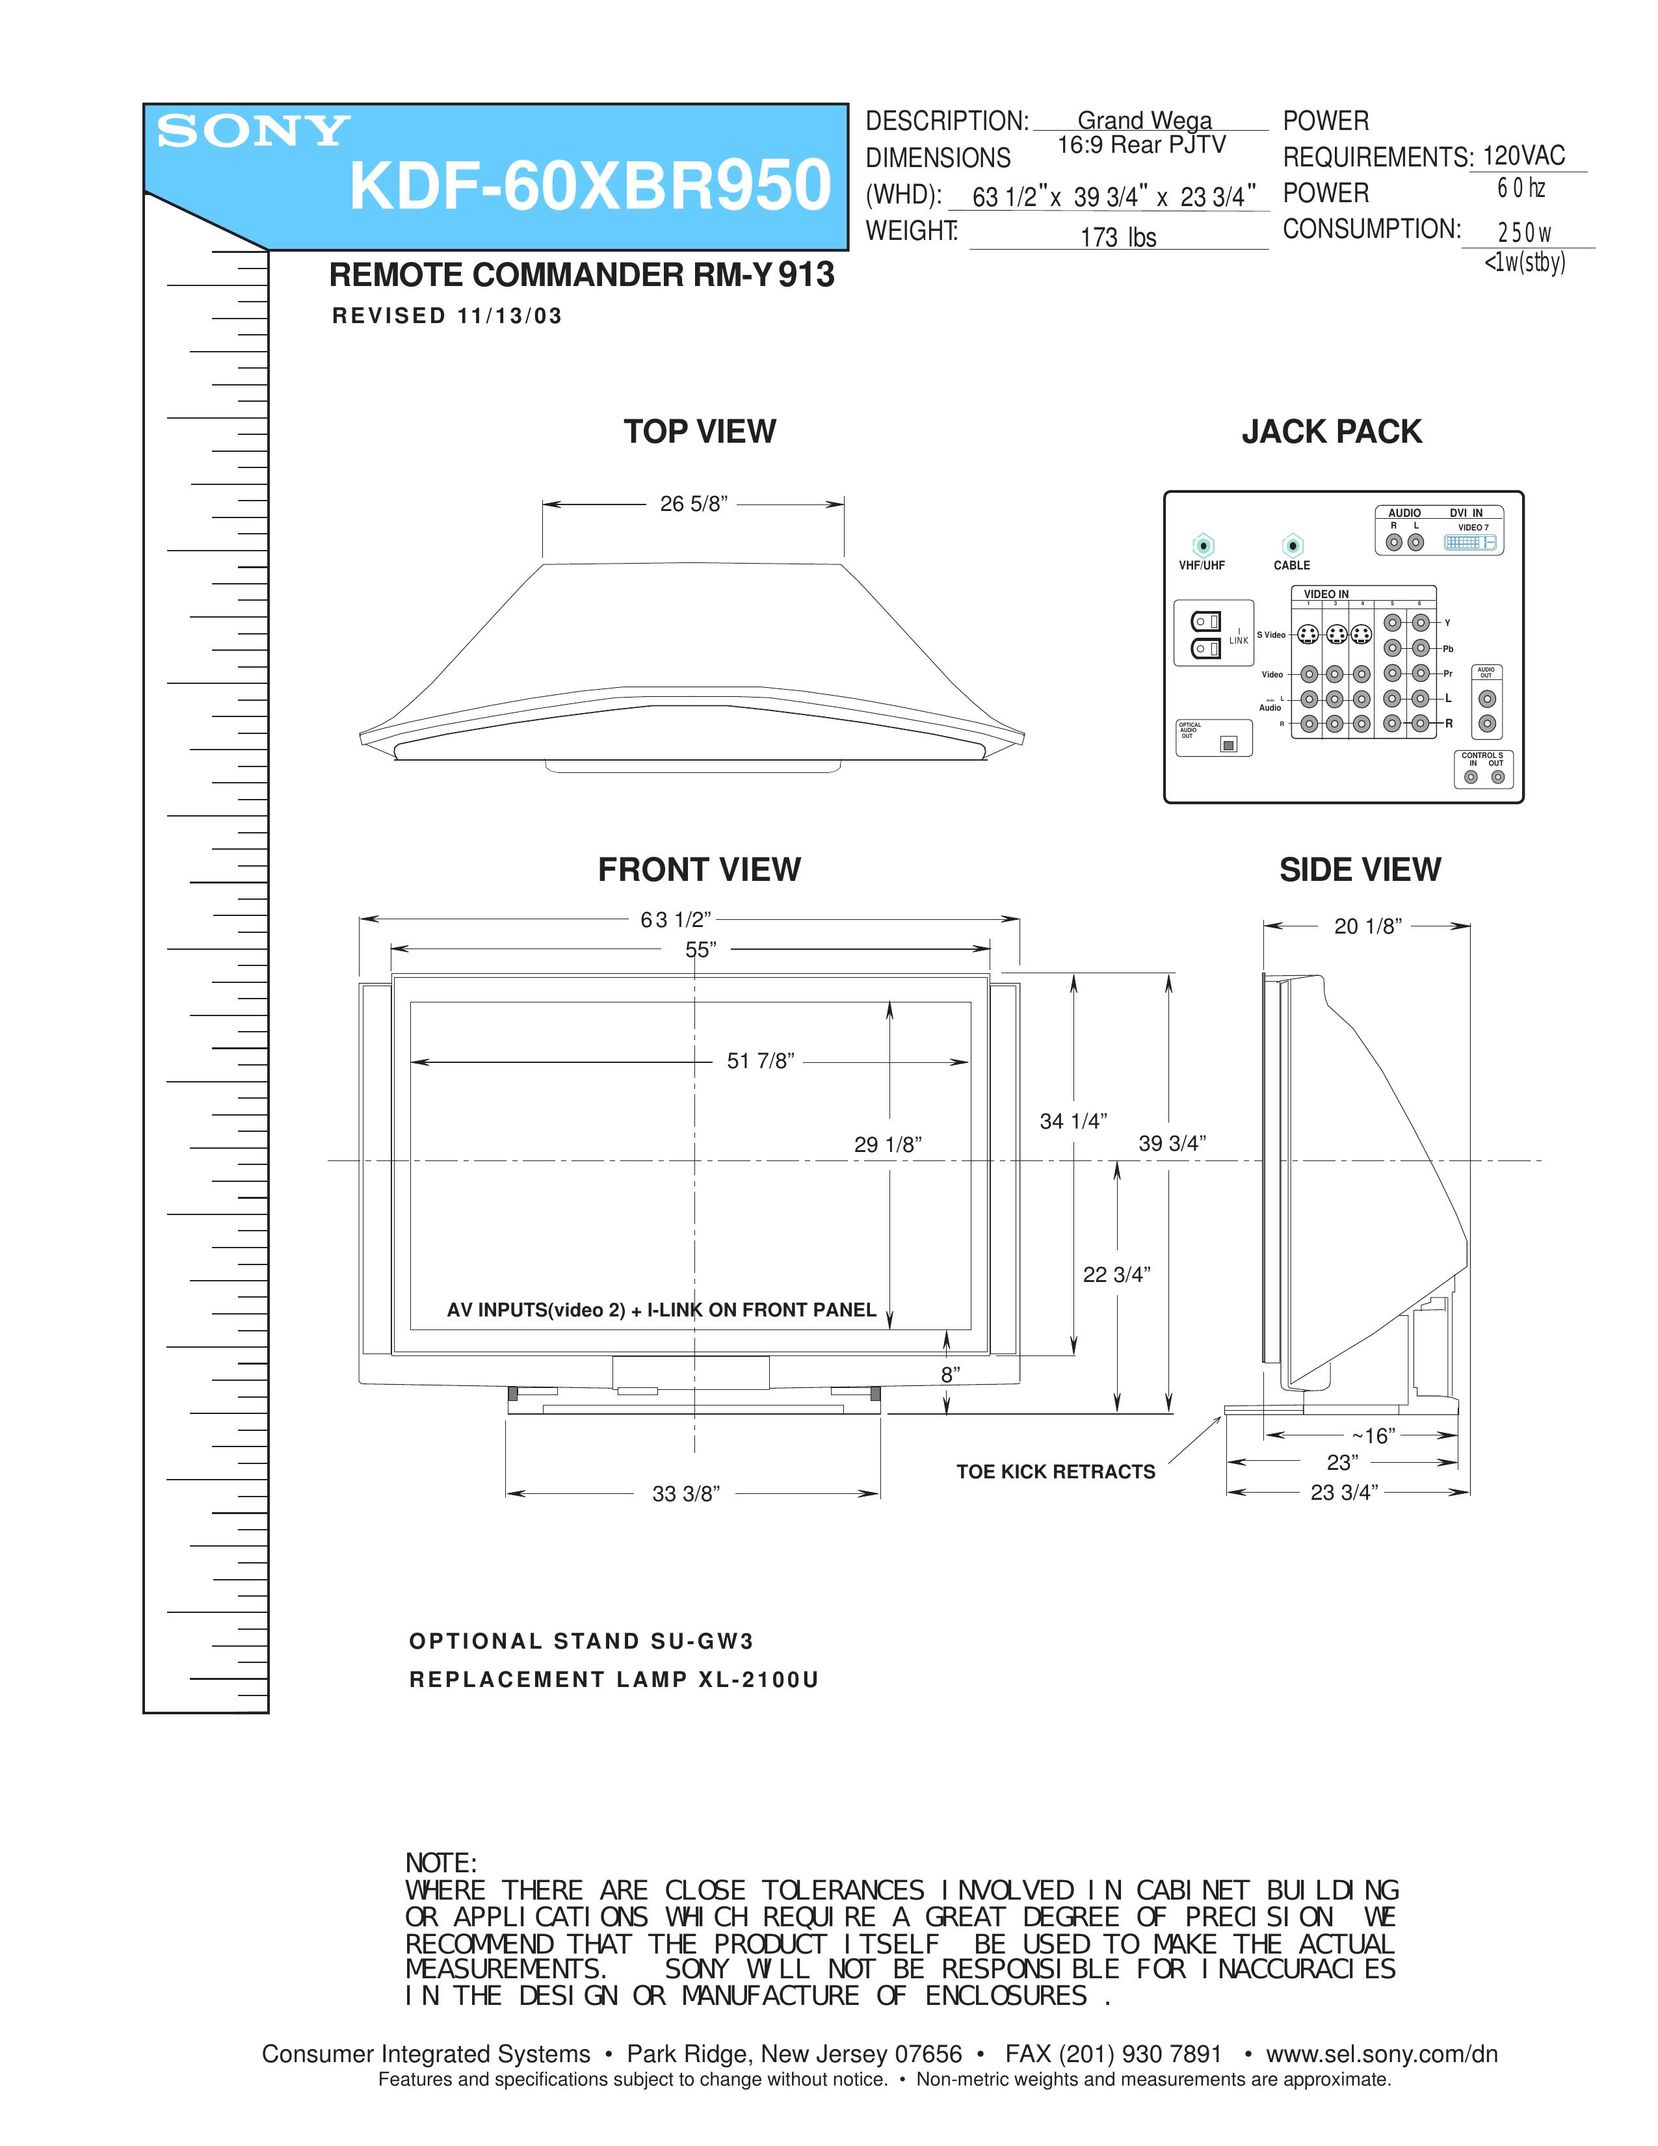 Sony KDF-60XBR950 Universal Remote User Manual